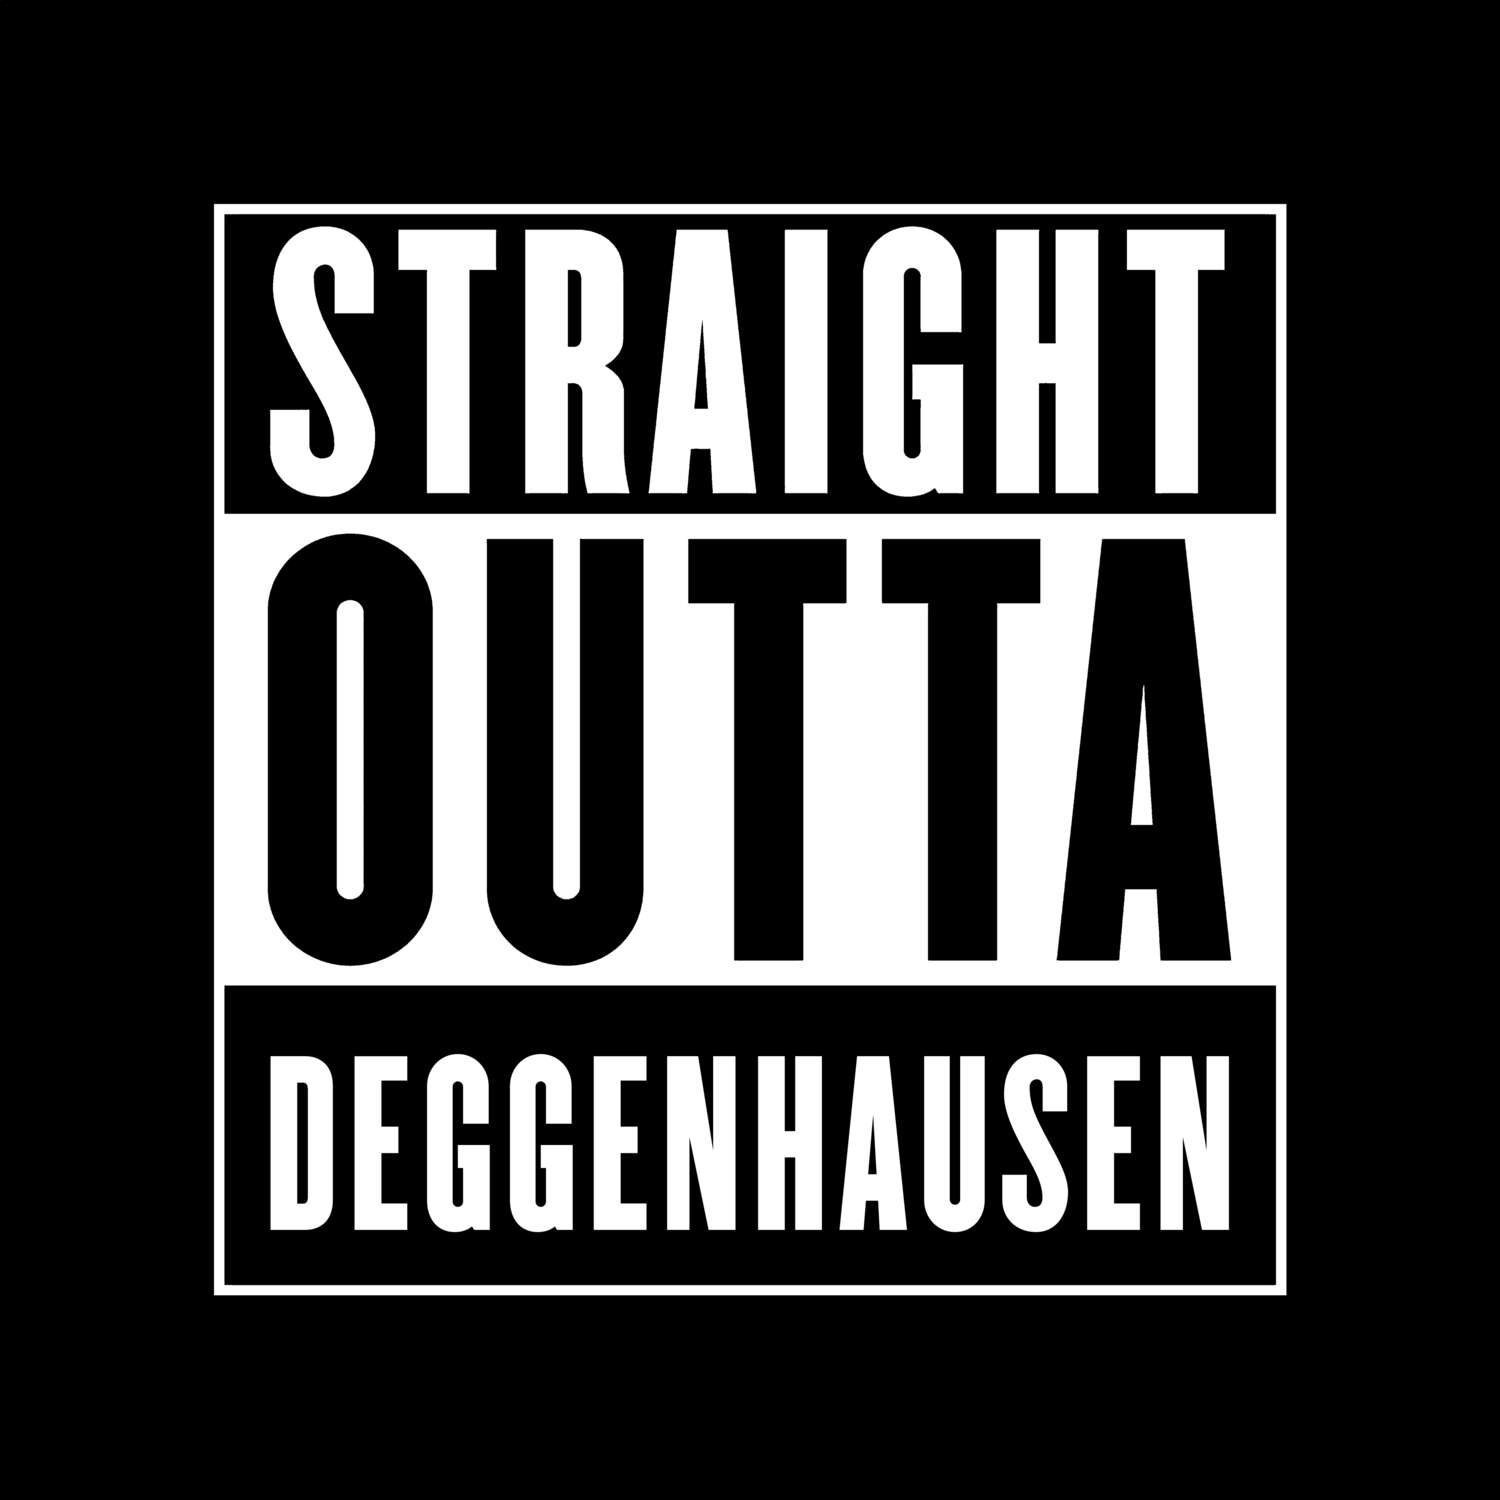 Deggenhausen T-Shirt »Straight Outta«